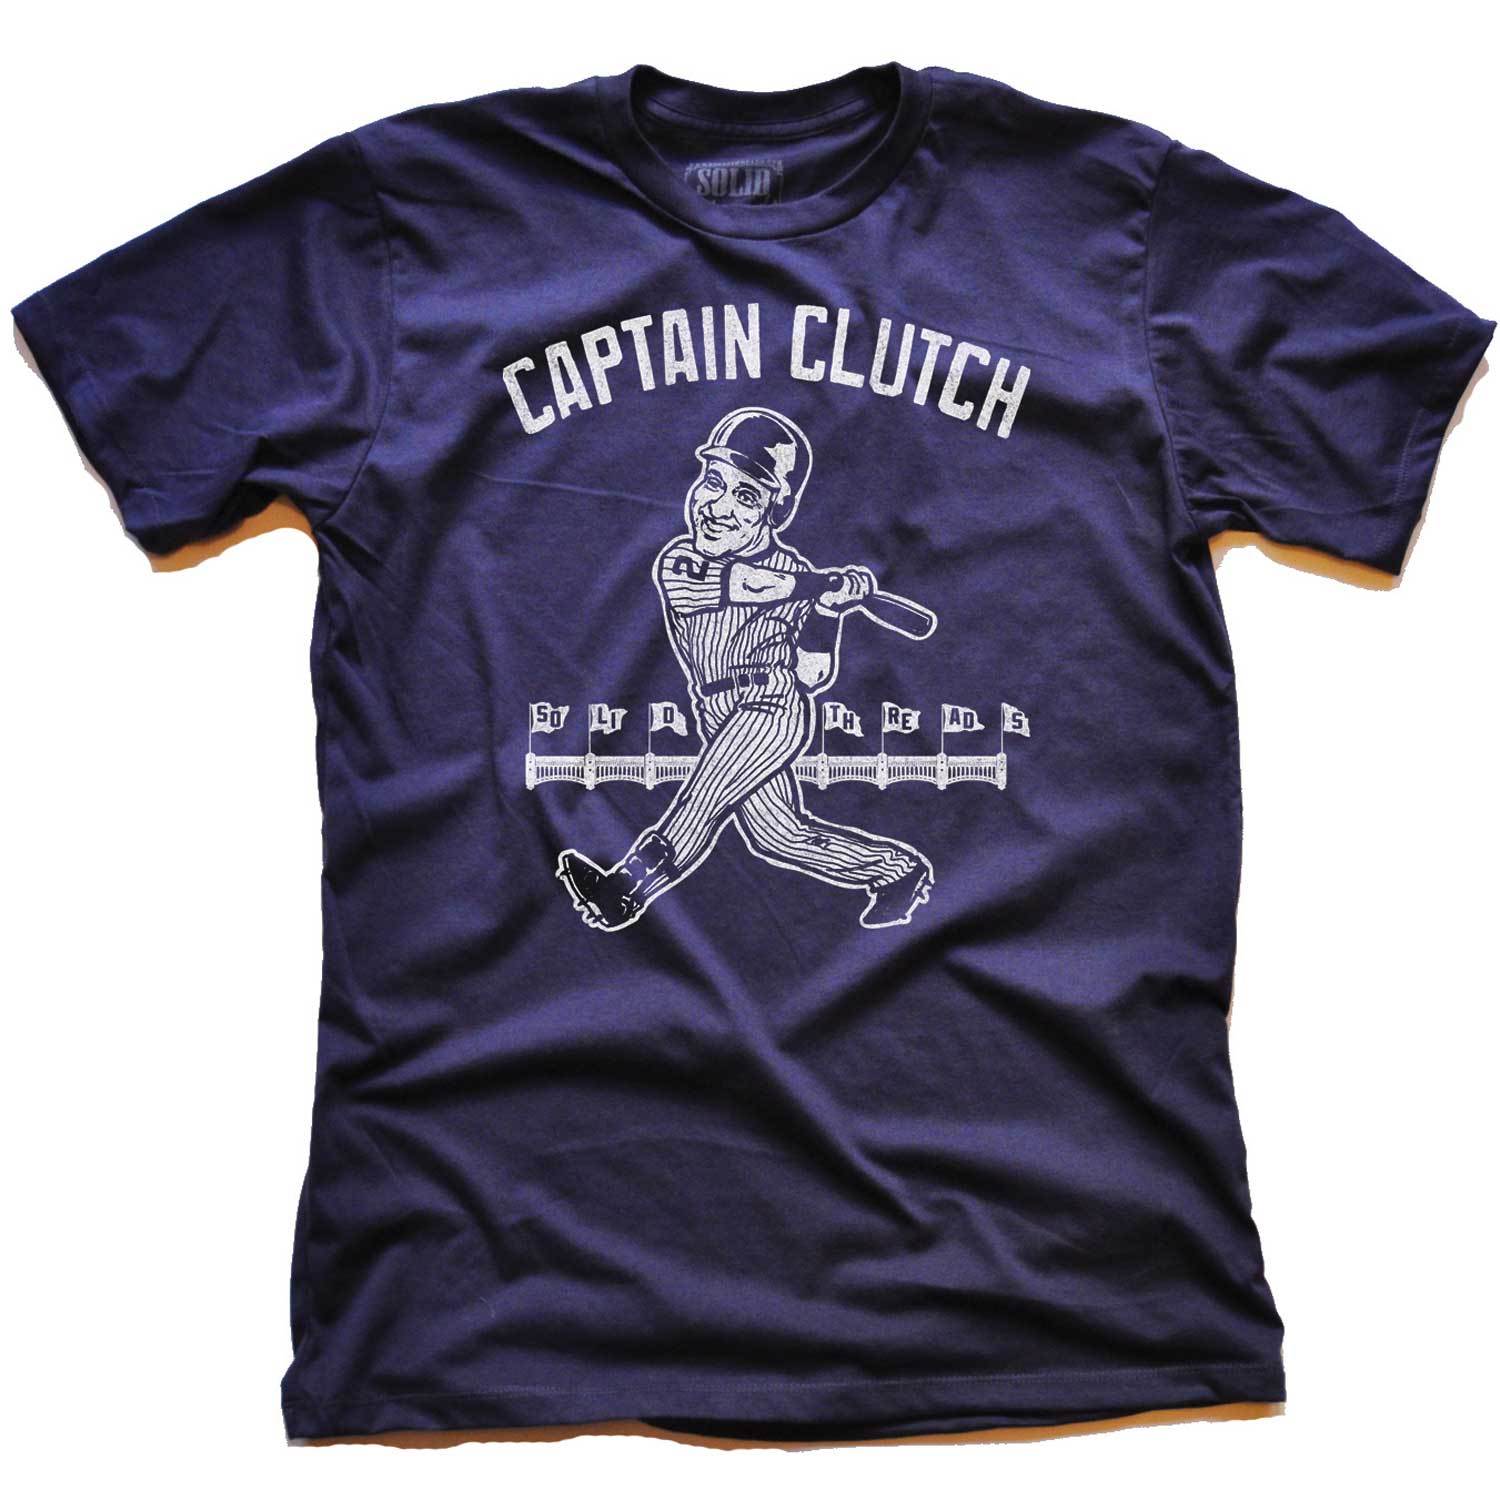 Mens Captain Clutch Vintage Inspired T-shirt with retro, Derek Jeter graphic